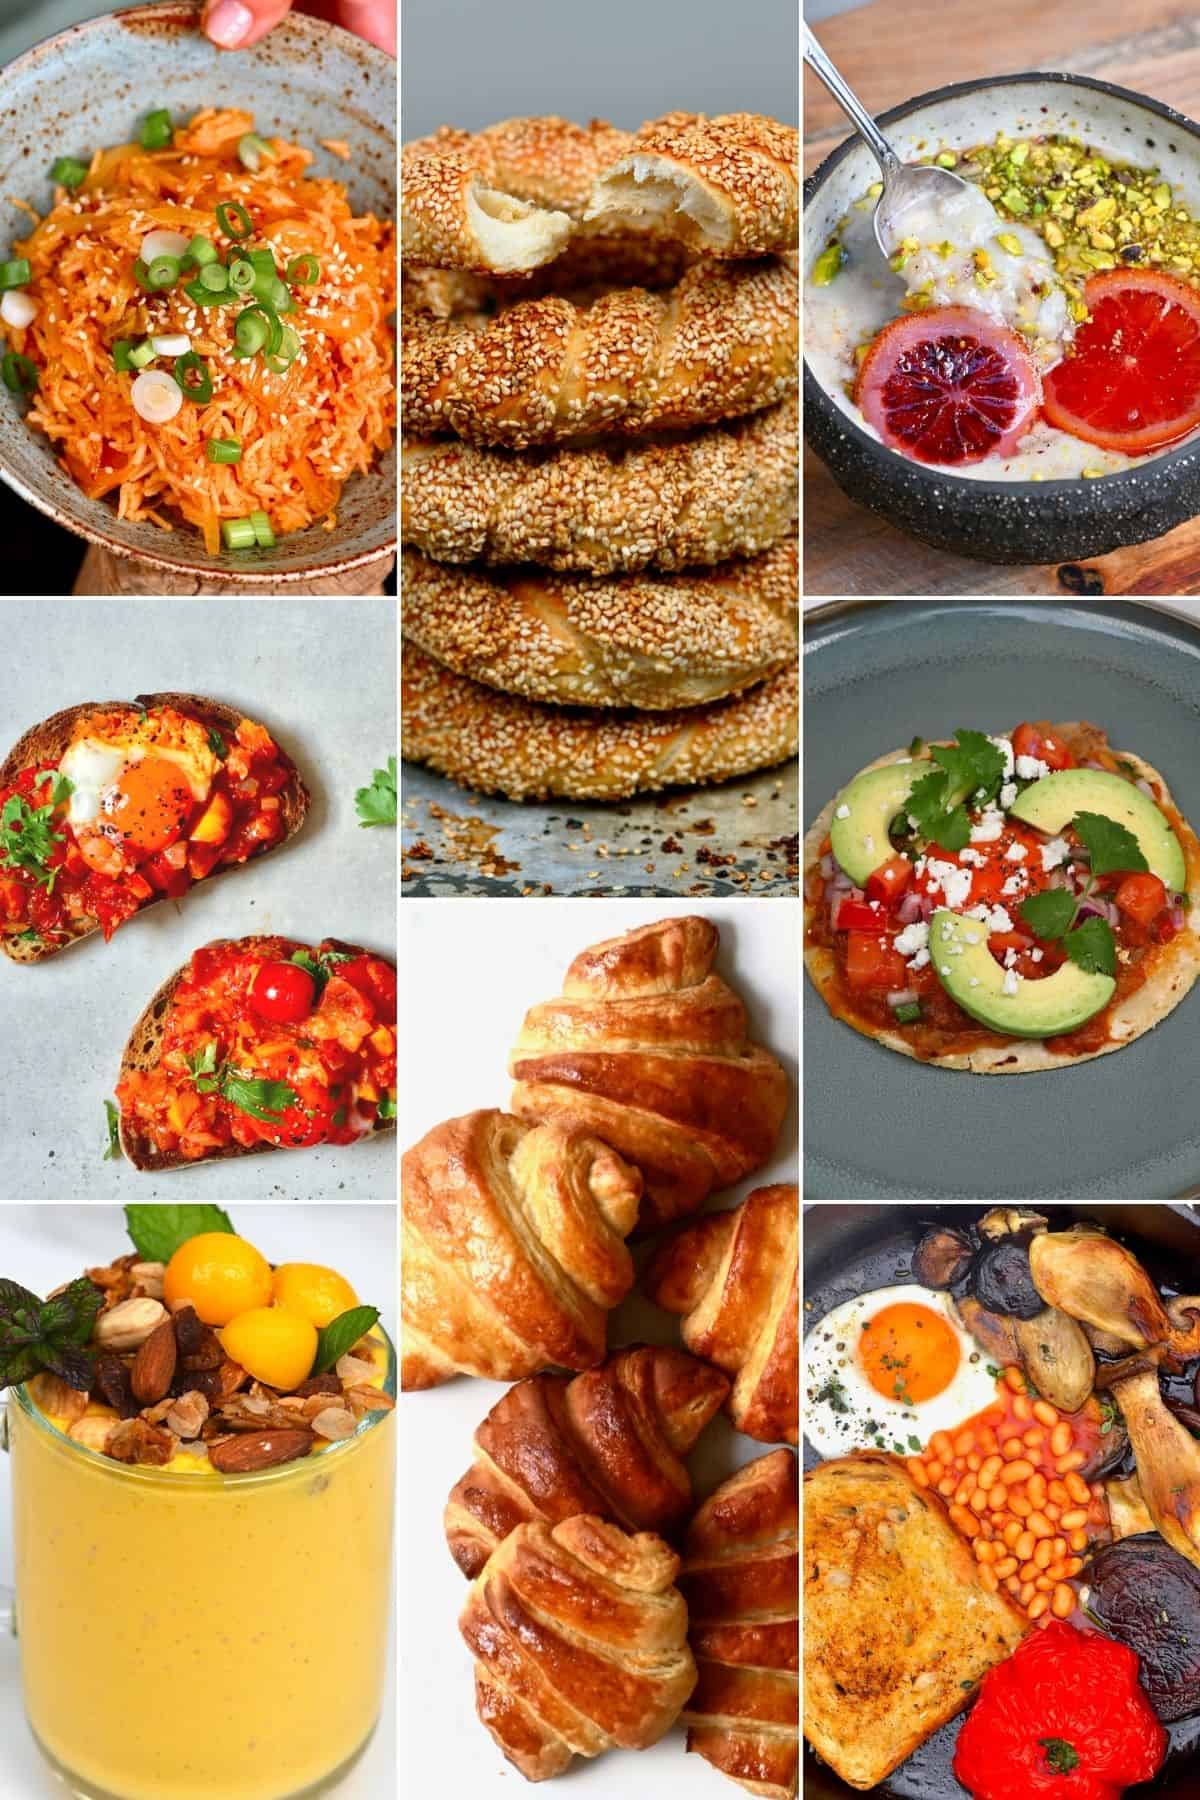 italian breakfast foods list